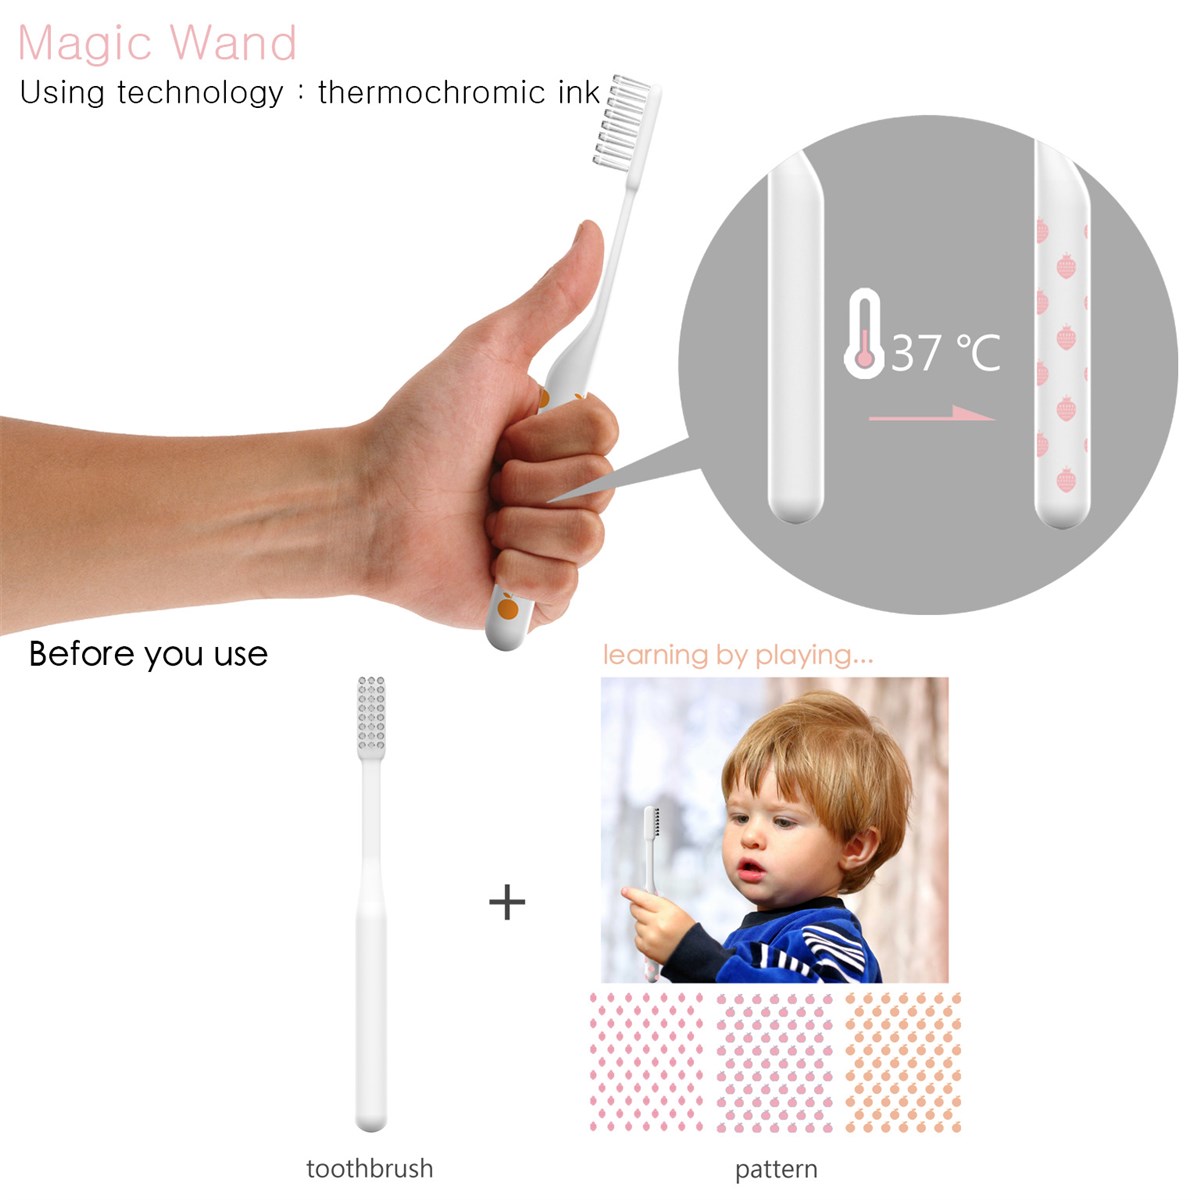 魔法牙刷—Magic Wand